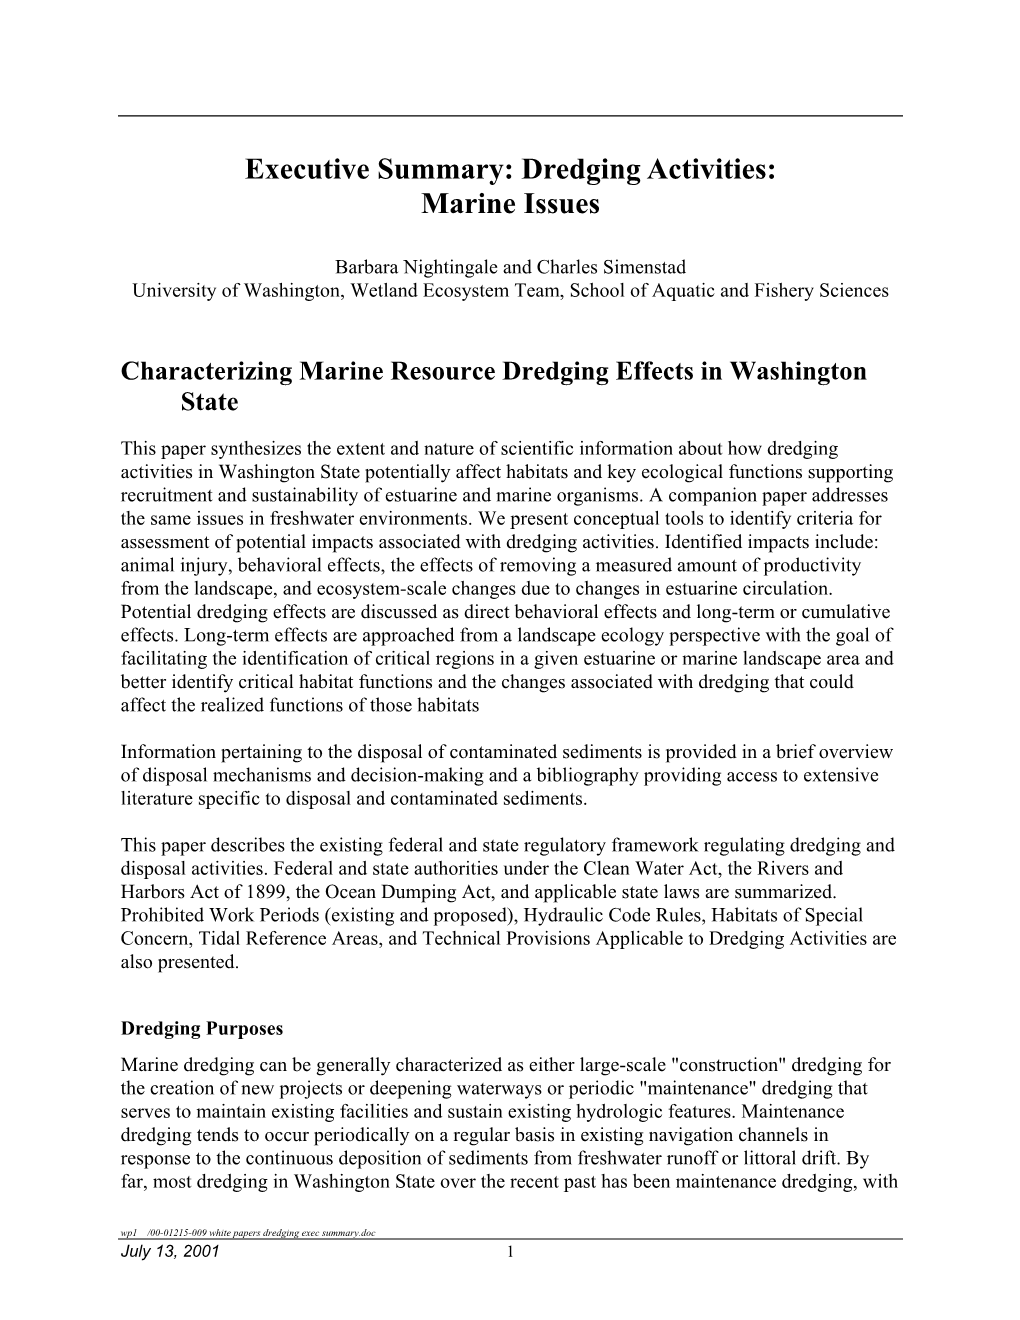 Dredging Activities: Marine Issues